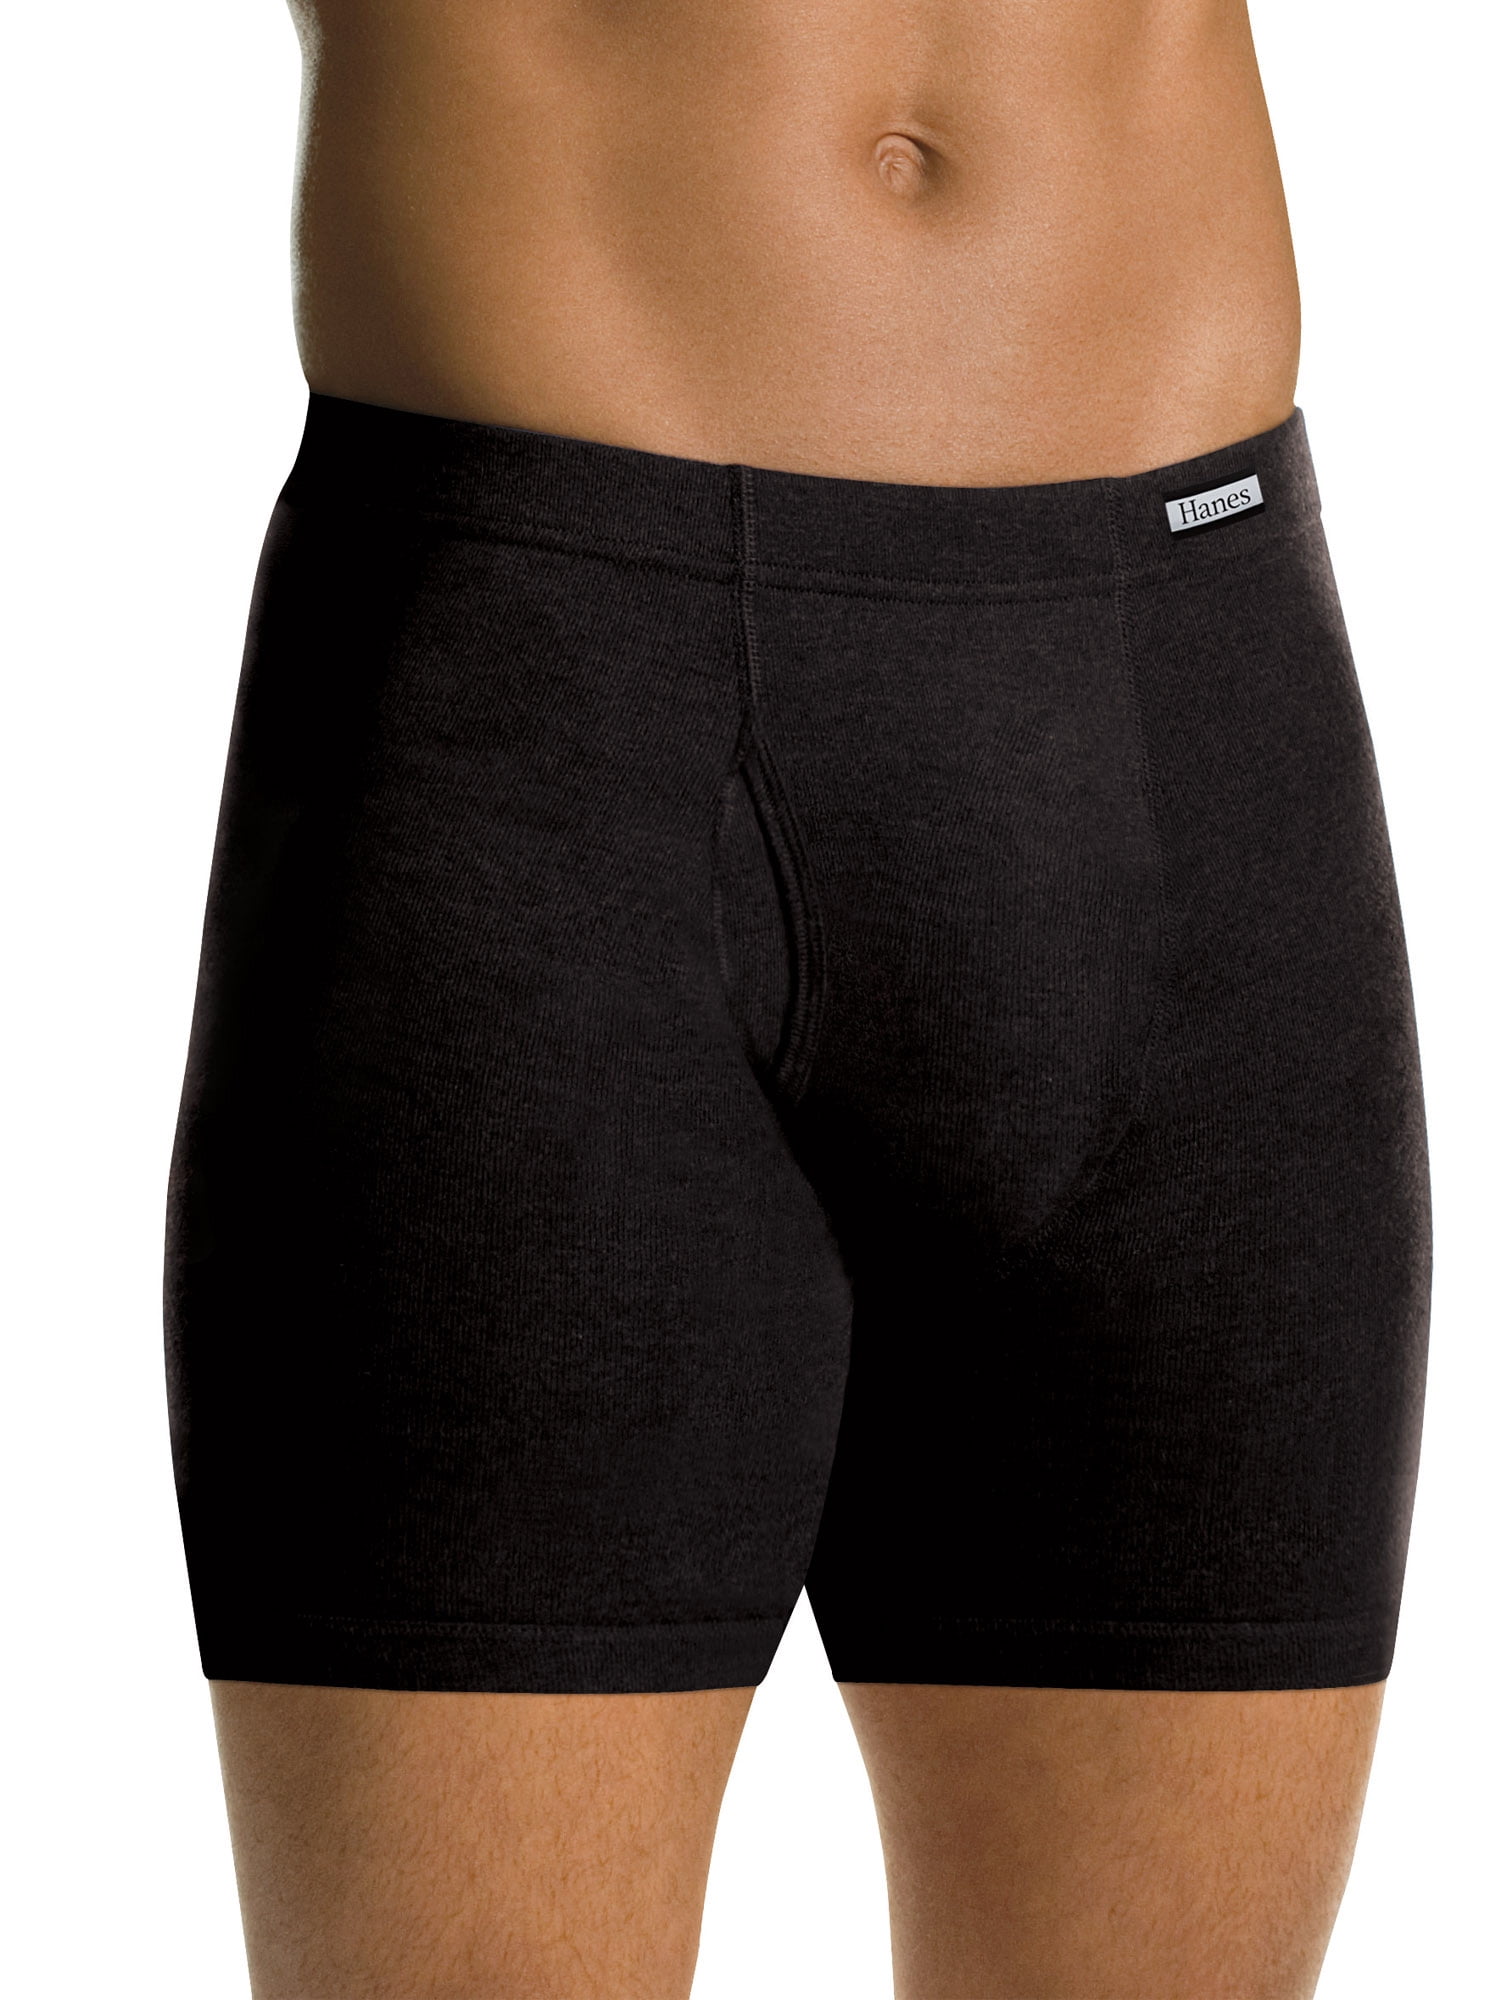 Details about   Hanes Men's Premium Original Fit Comfort Soft Waistband Boxer Briefs Wicking S&M 